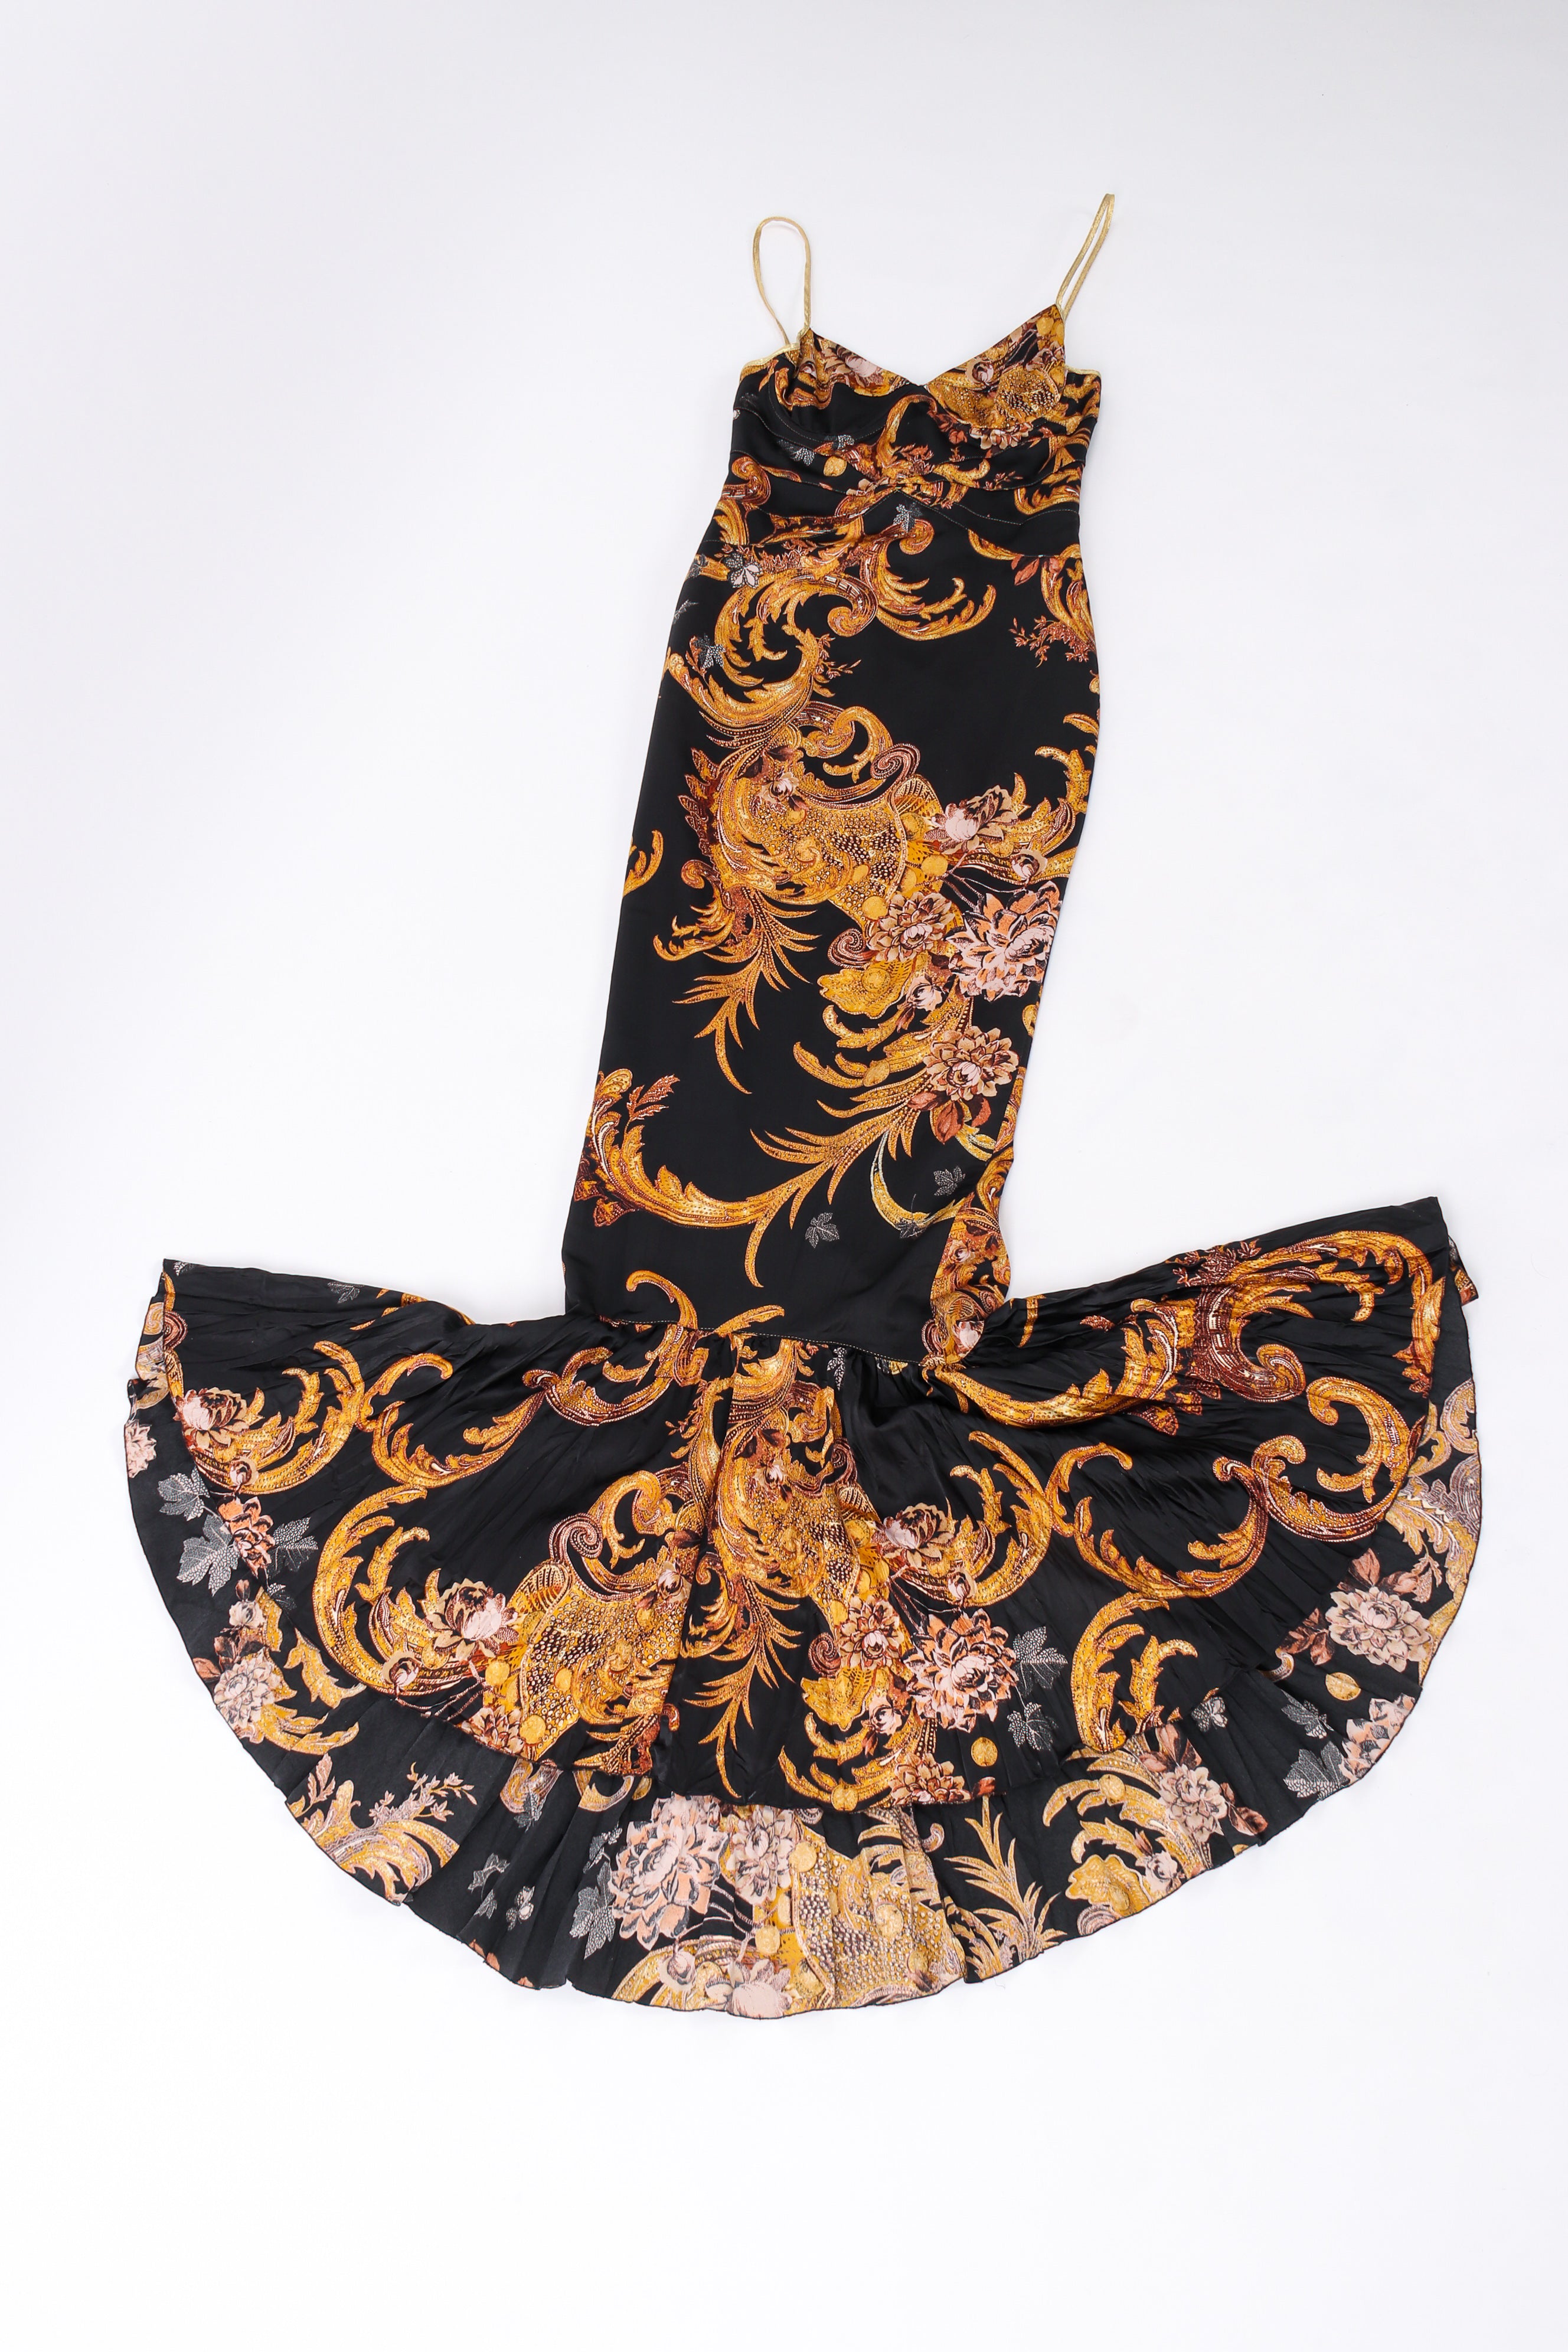 Vintage Roberto Cavalli Fleur Brocade Mermaid Dress dress flat lay @ Recess LA